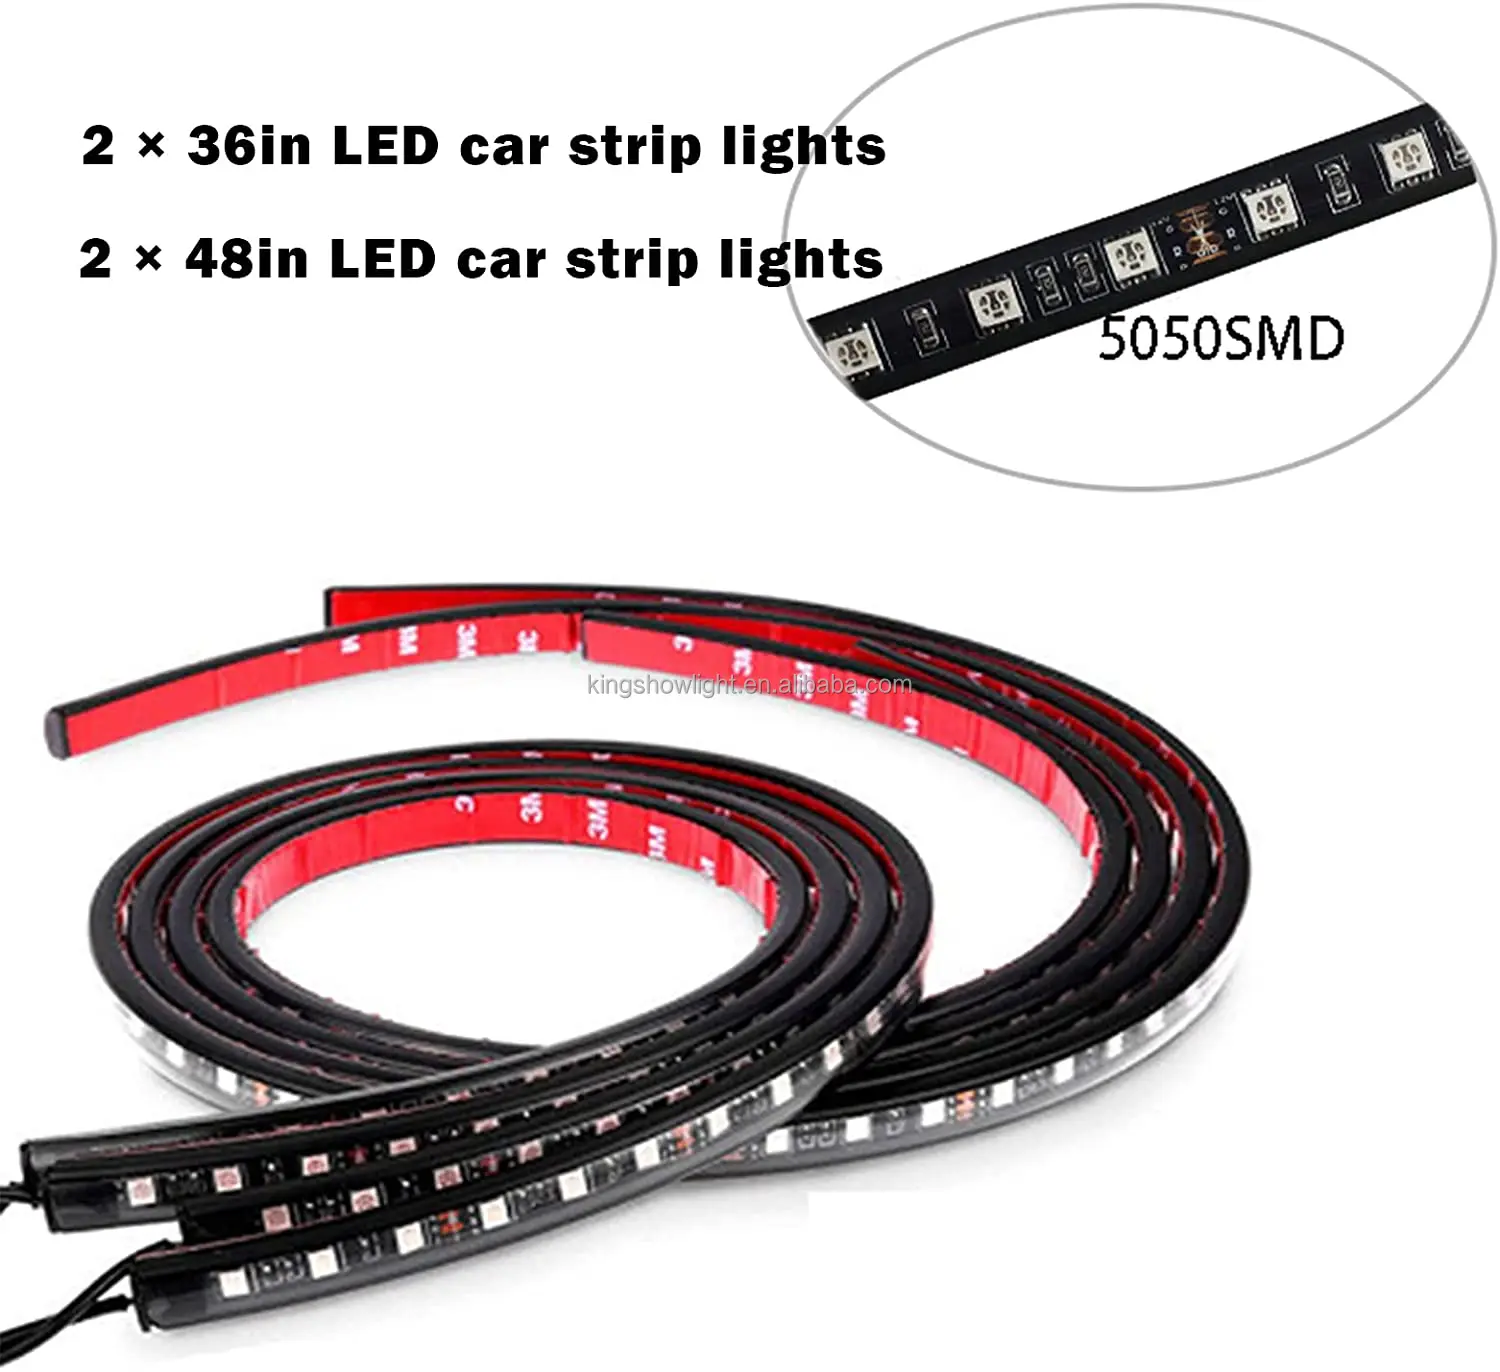 4PCS Multi-Color LED Underbody Strip Light Kit with APP & RF Control Waterproof for Exterior Cars Trucks Vans Decorative Light